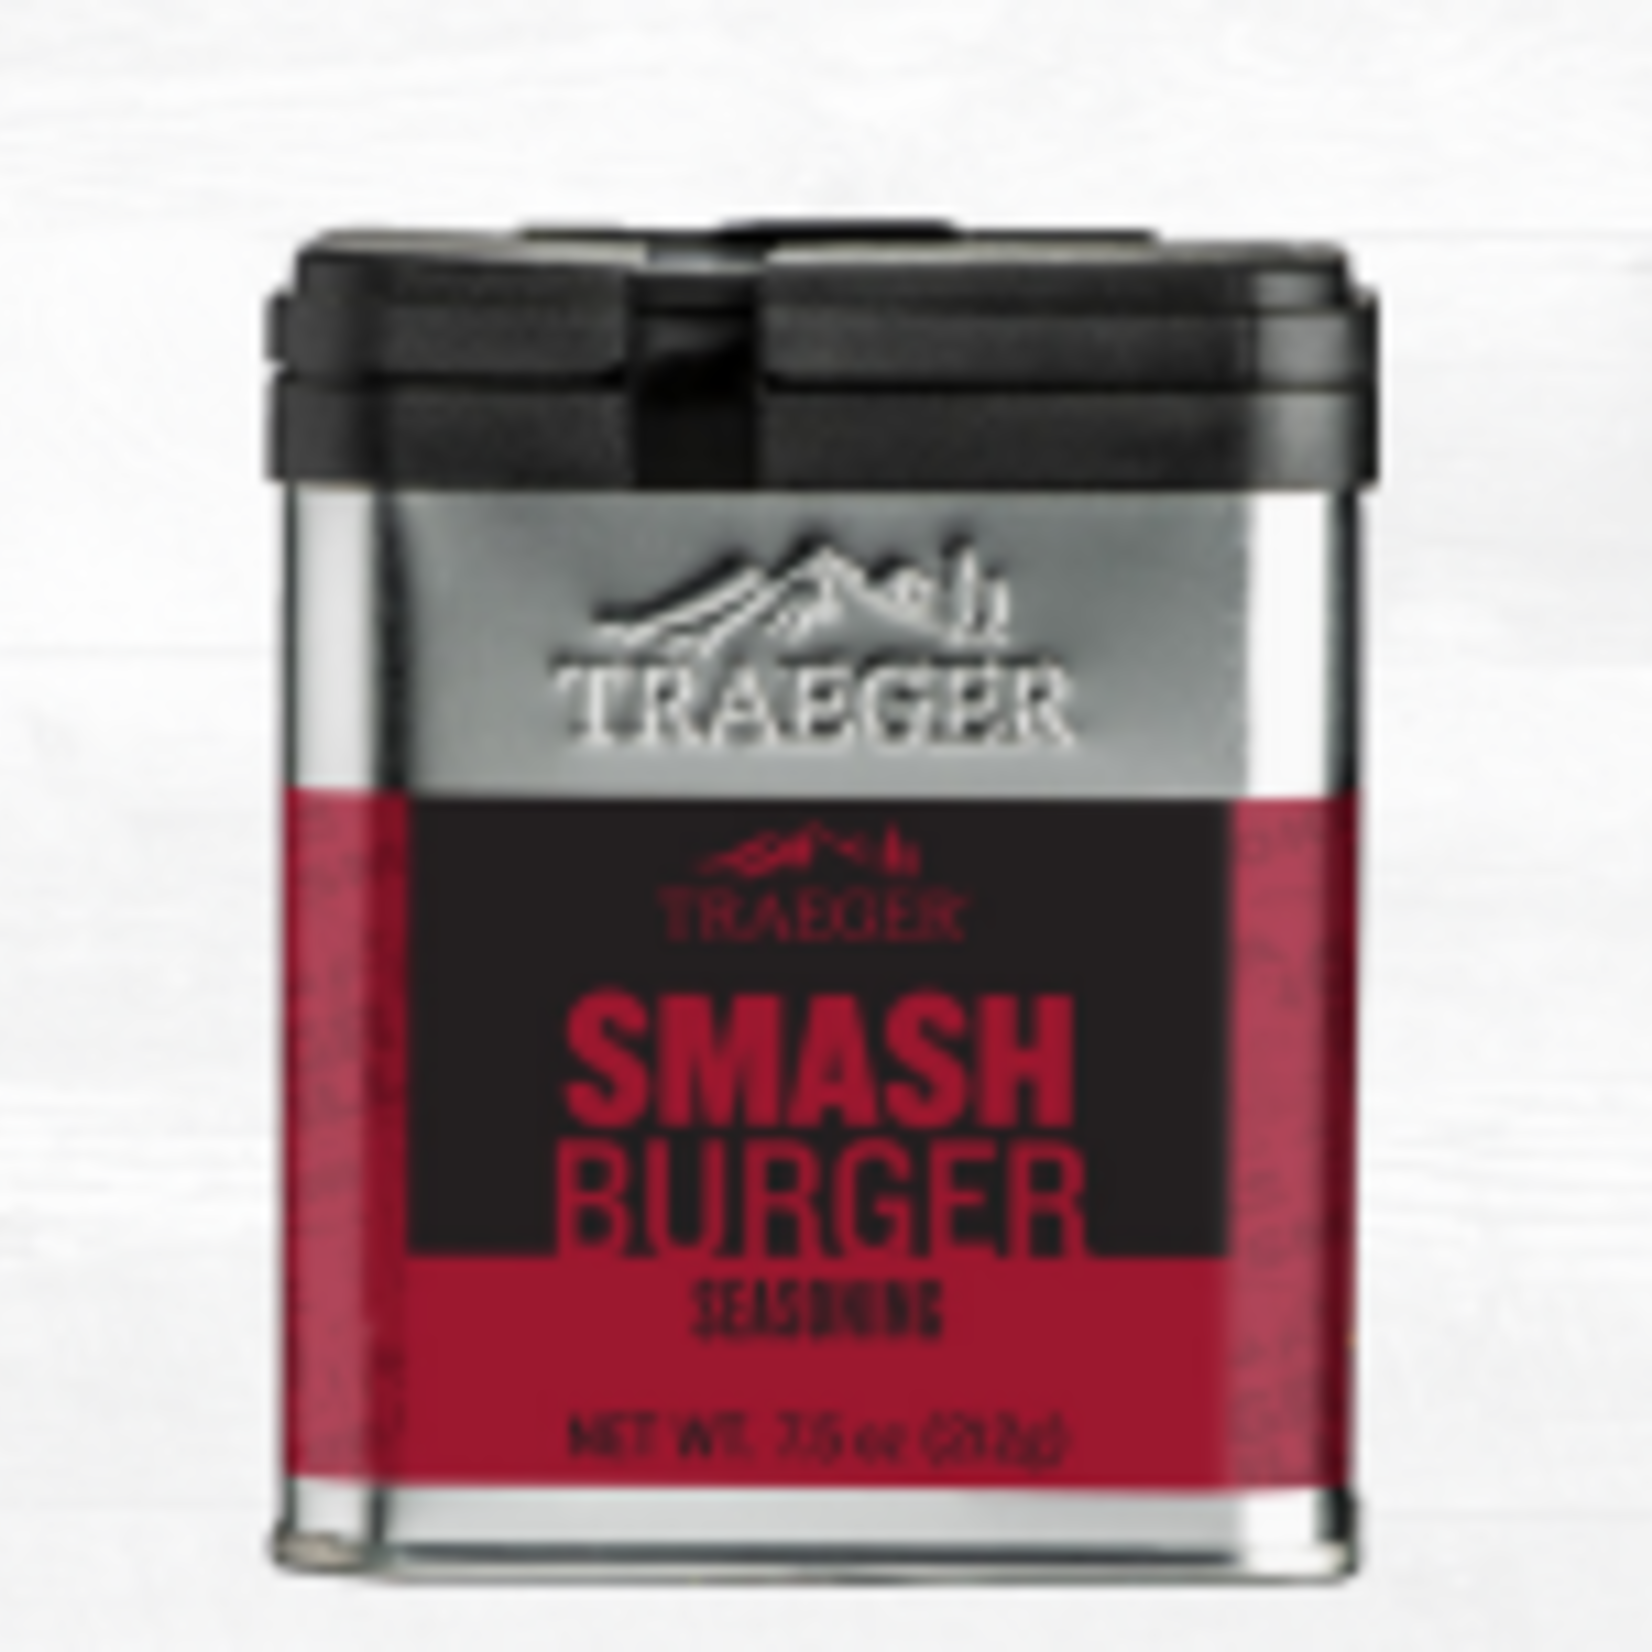 Traeger Traeger Smash Burger Seasoning